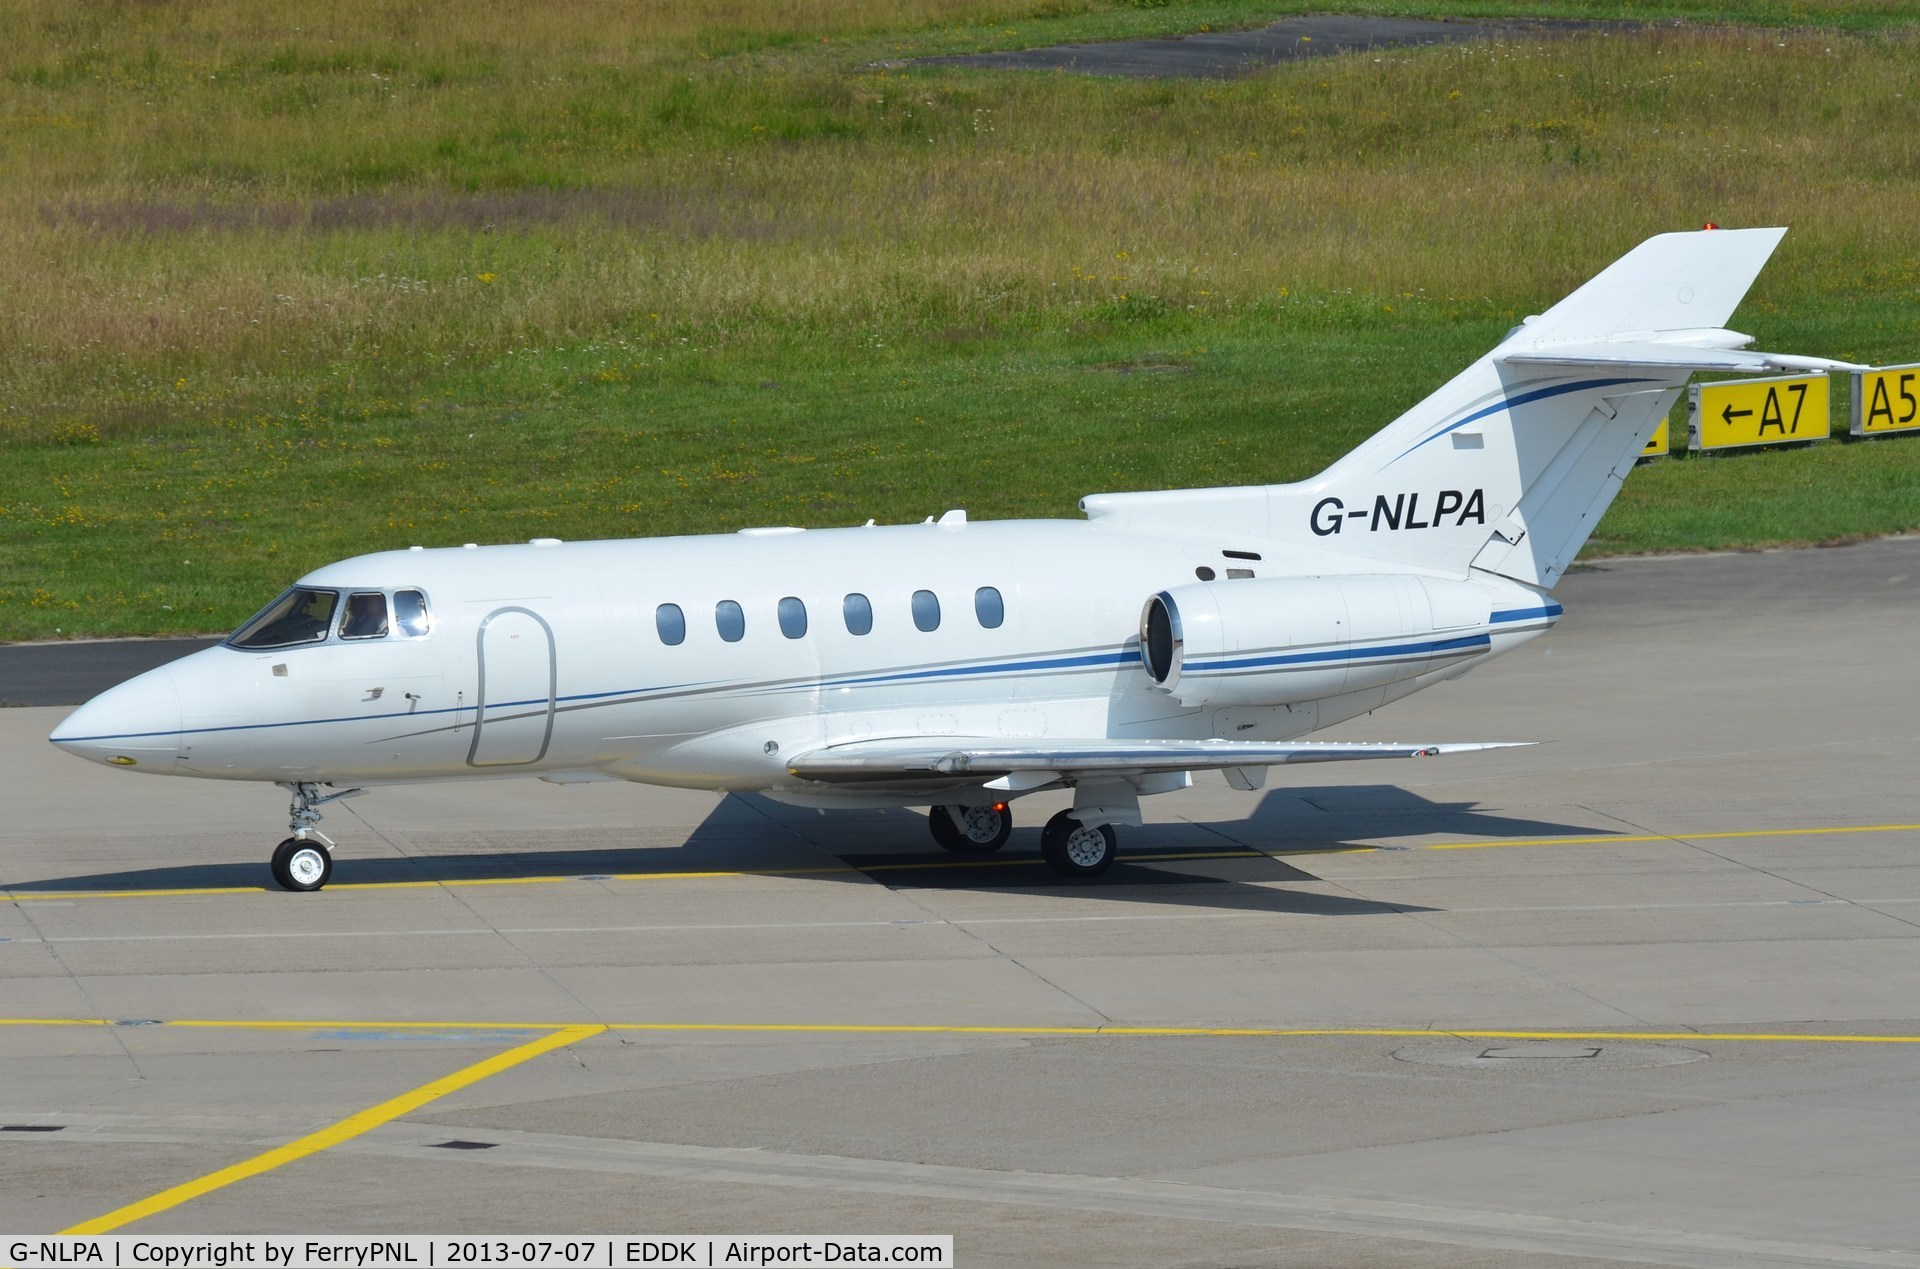 G-NLPA, 2008 Hawker 750 C/N HB-14, Hangar 8 HS750 just arrived.